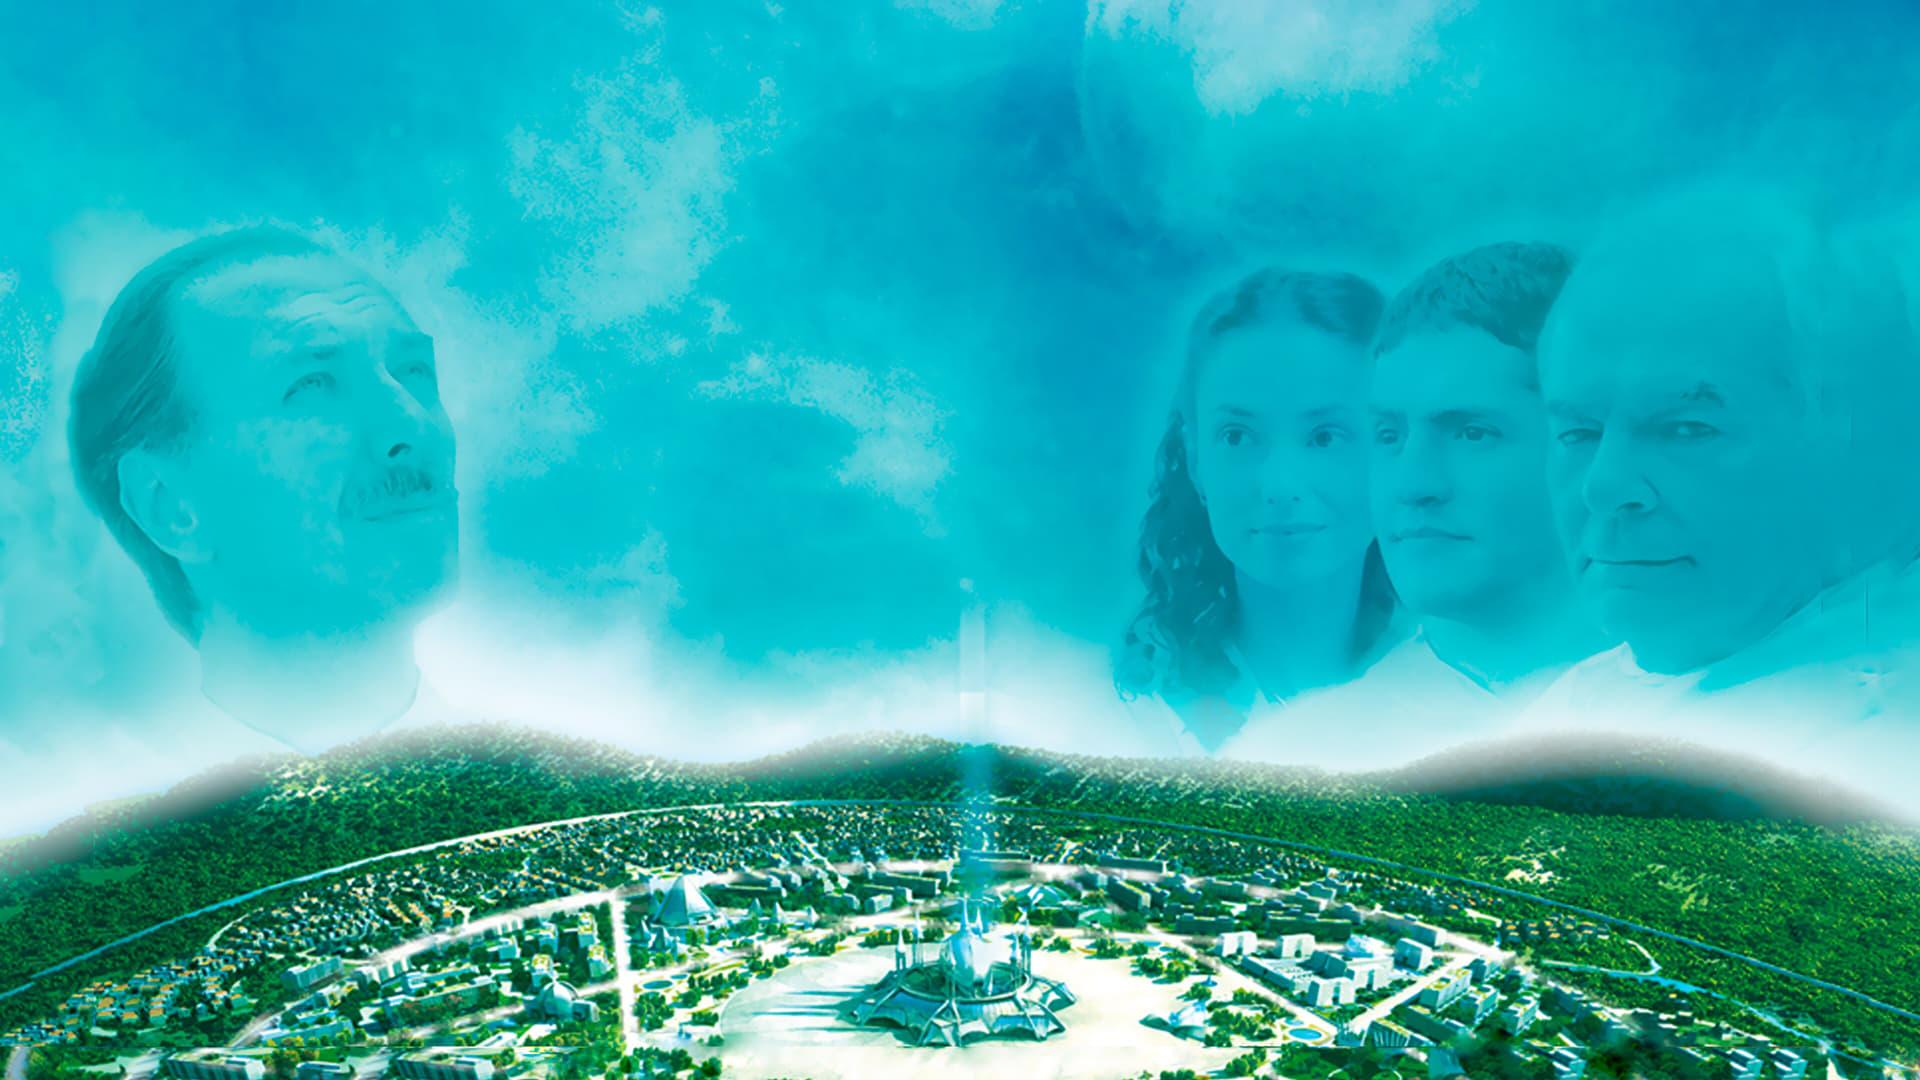 Astral City: A Spiritual Journey backdrop